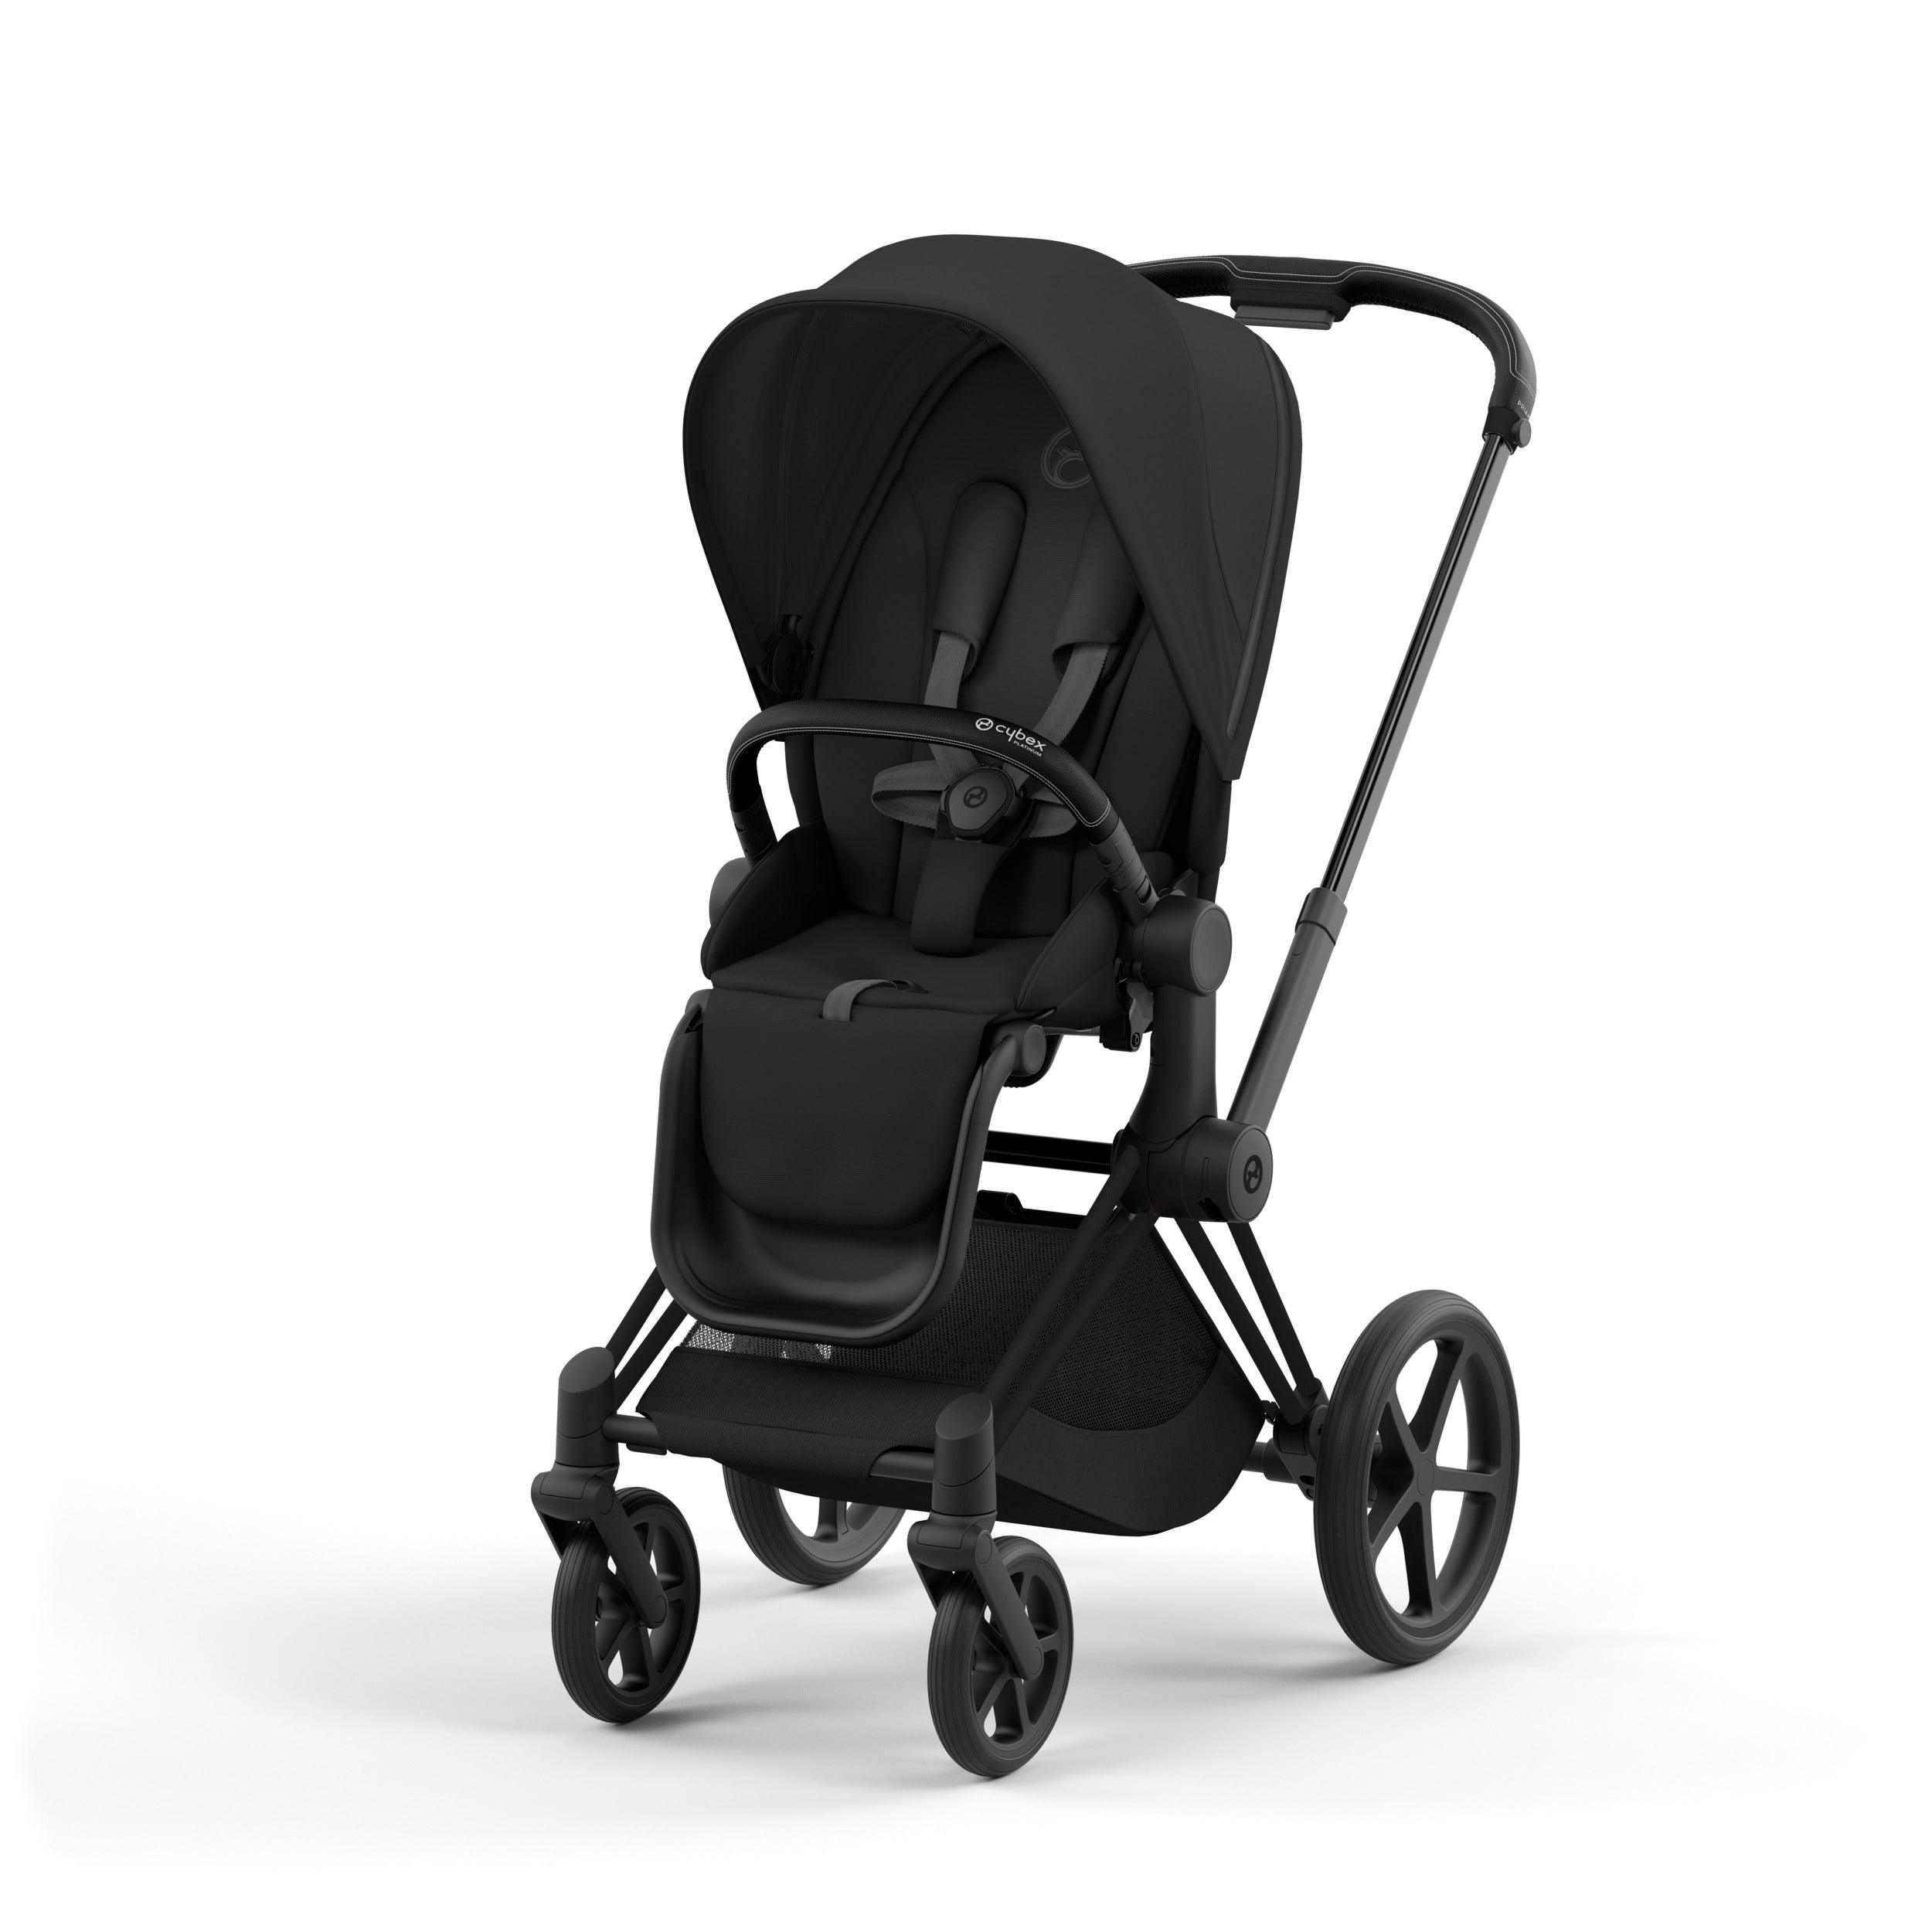 CYBEX Priam Baby Stroller in Sepia Black & Matte Black frame